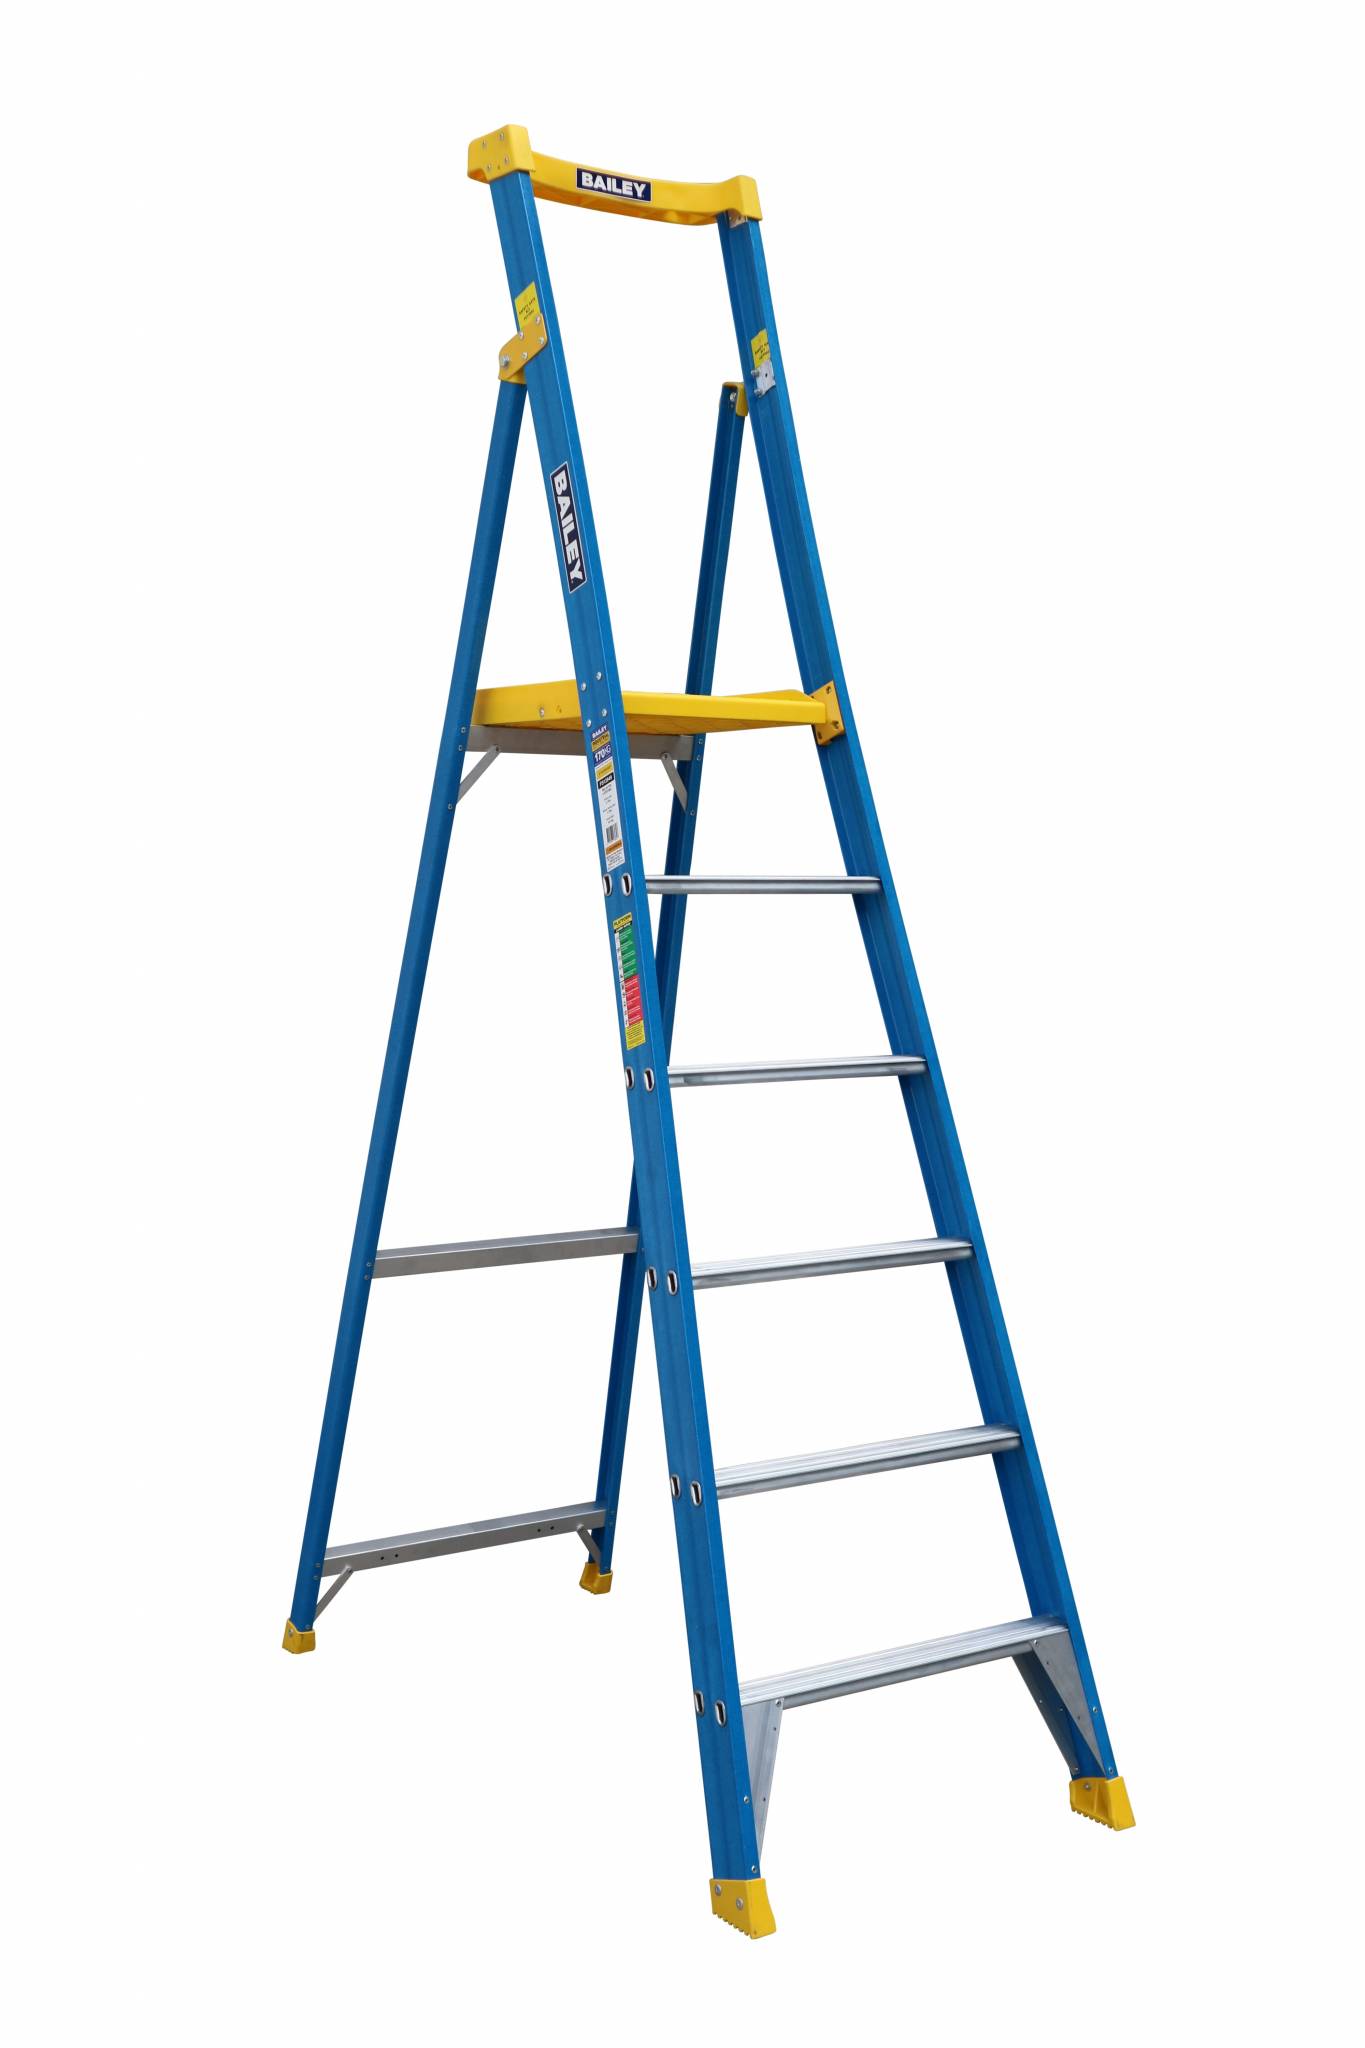 Bailey FS23121 Retractable Castor Kit Fibreglass Platform Step 7-8 Step Ladders